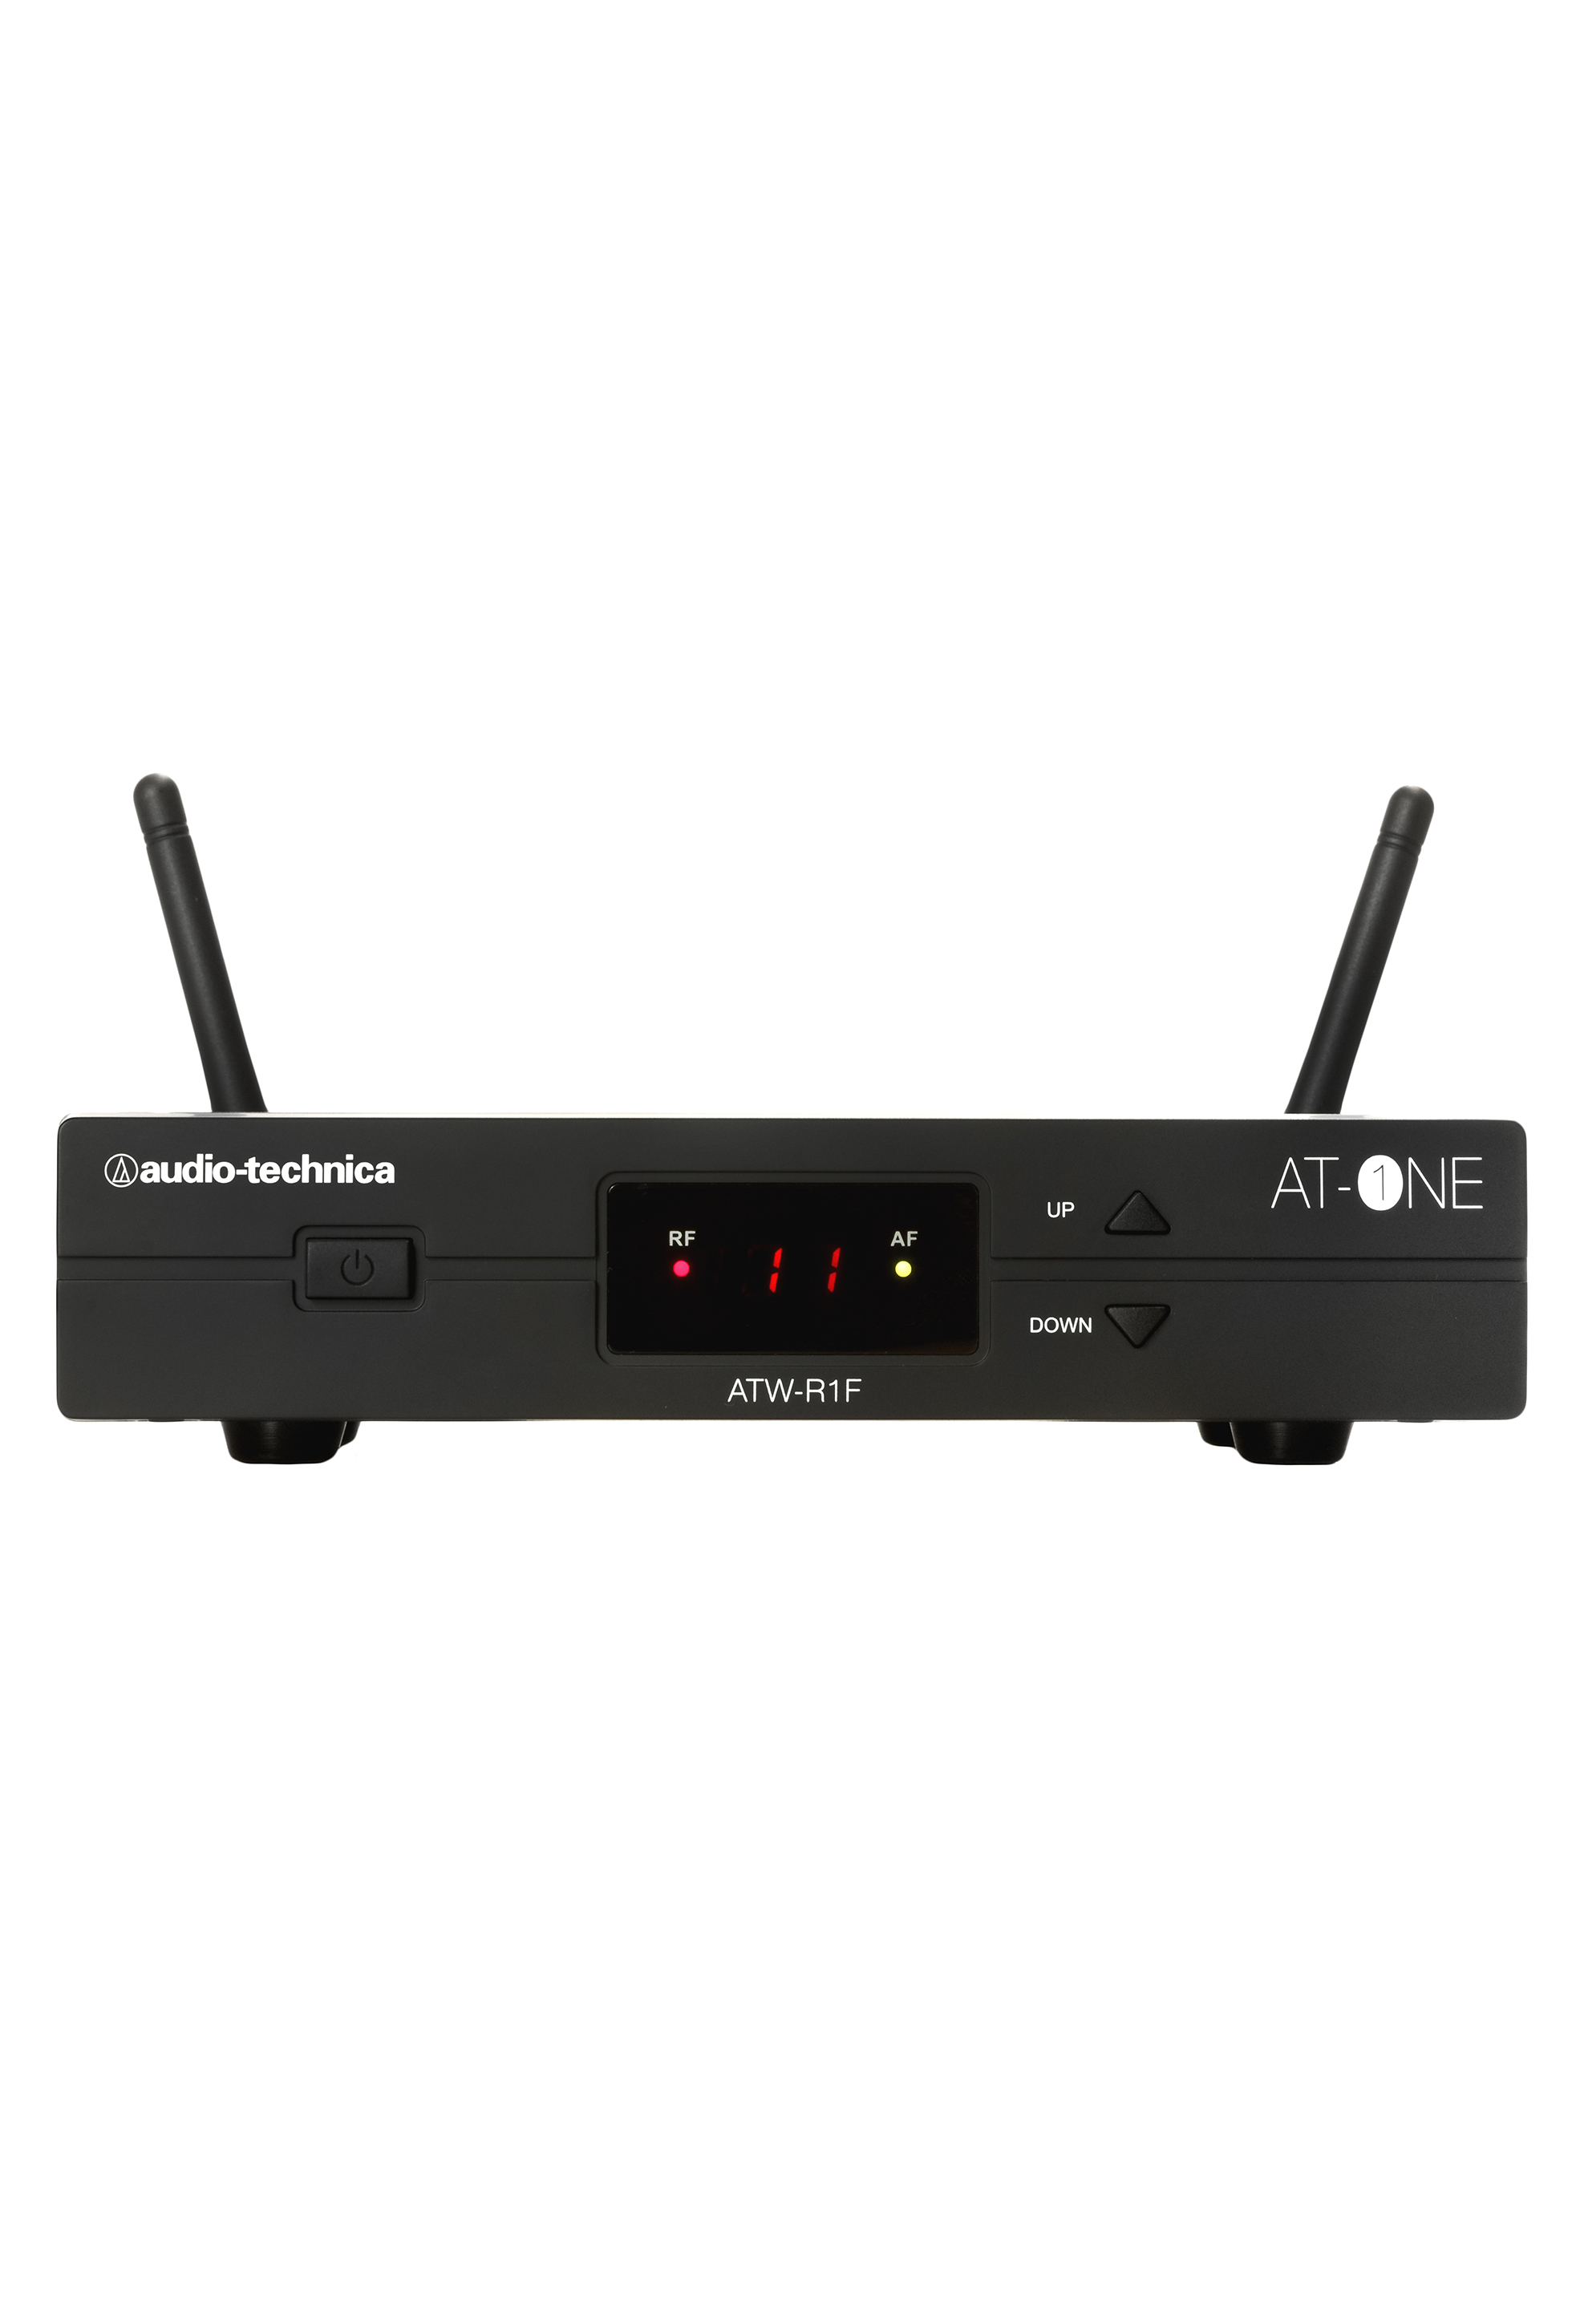 Audio Technica Atw11f Émetteur De Poche Atw-t1f - Wireless system - Variation 1